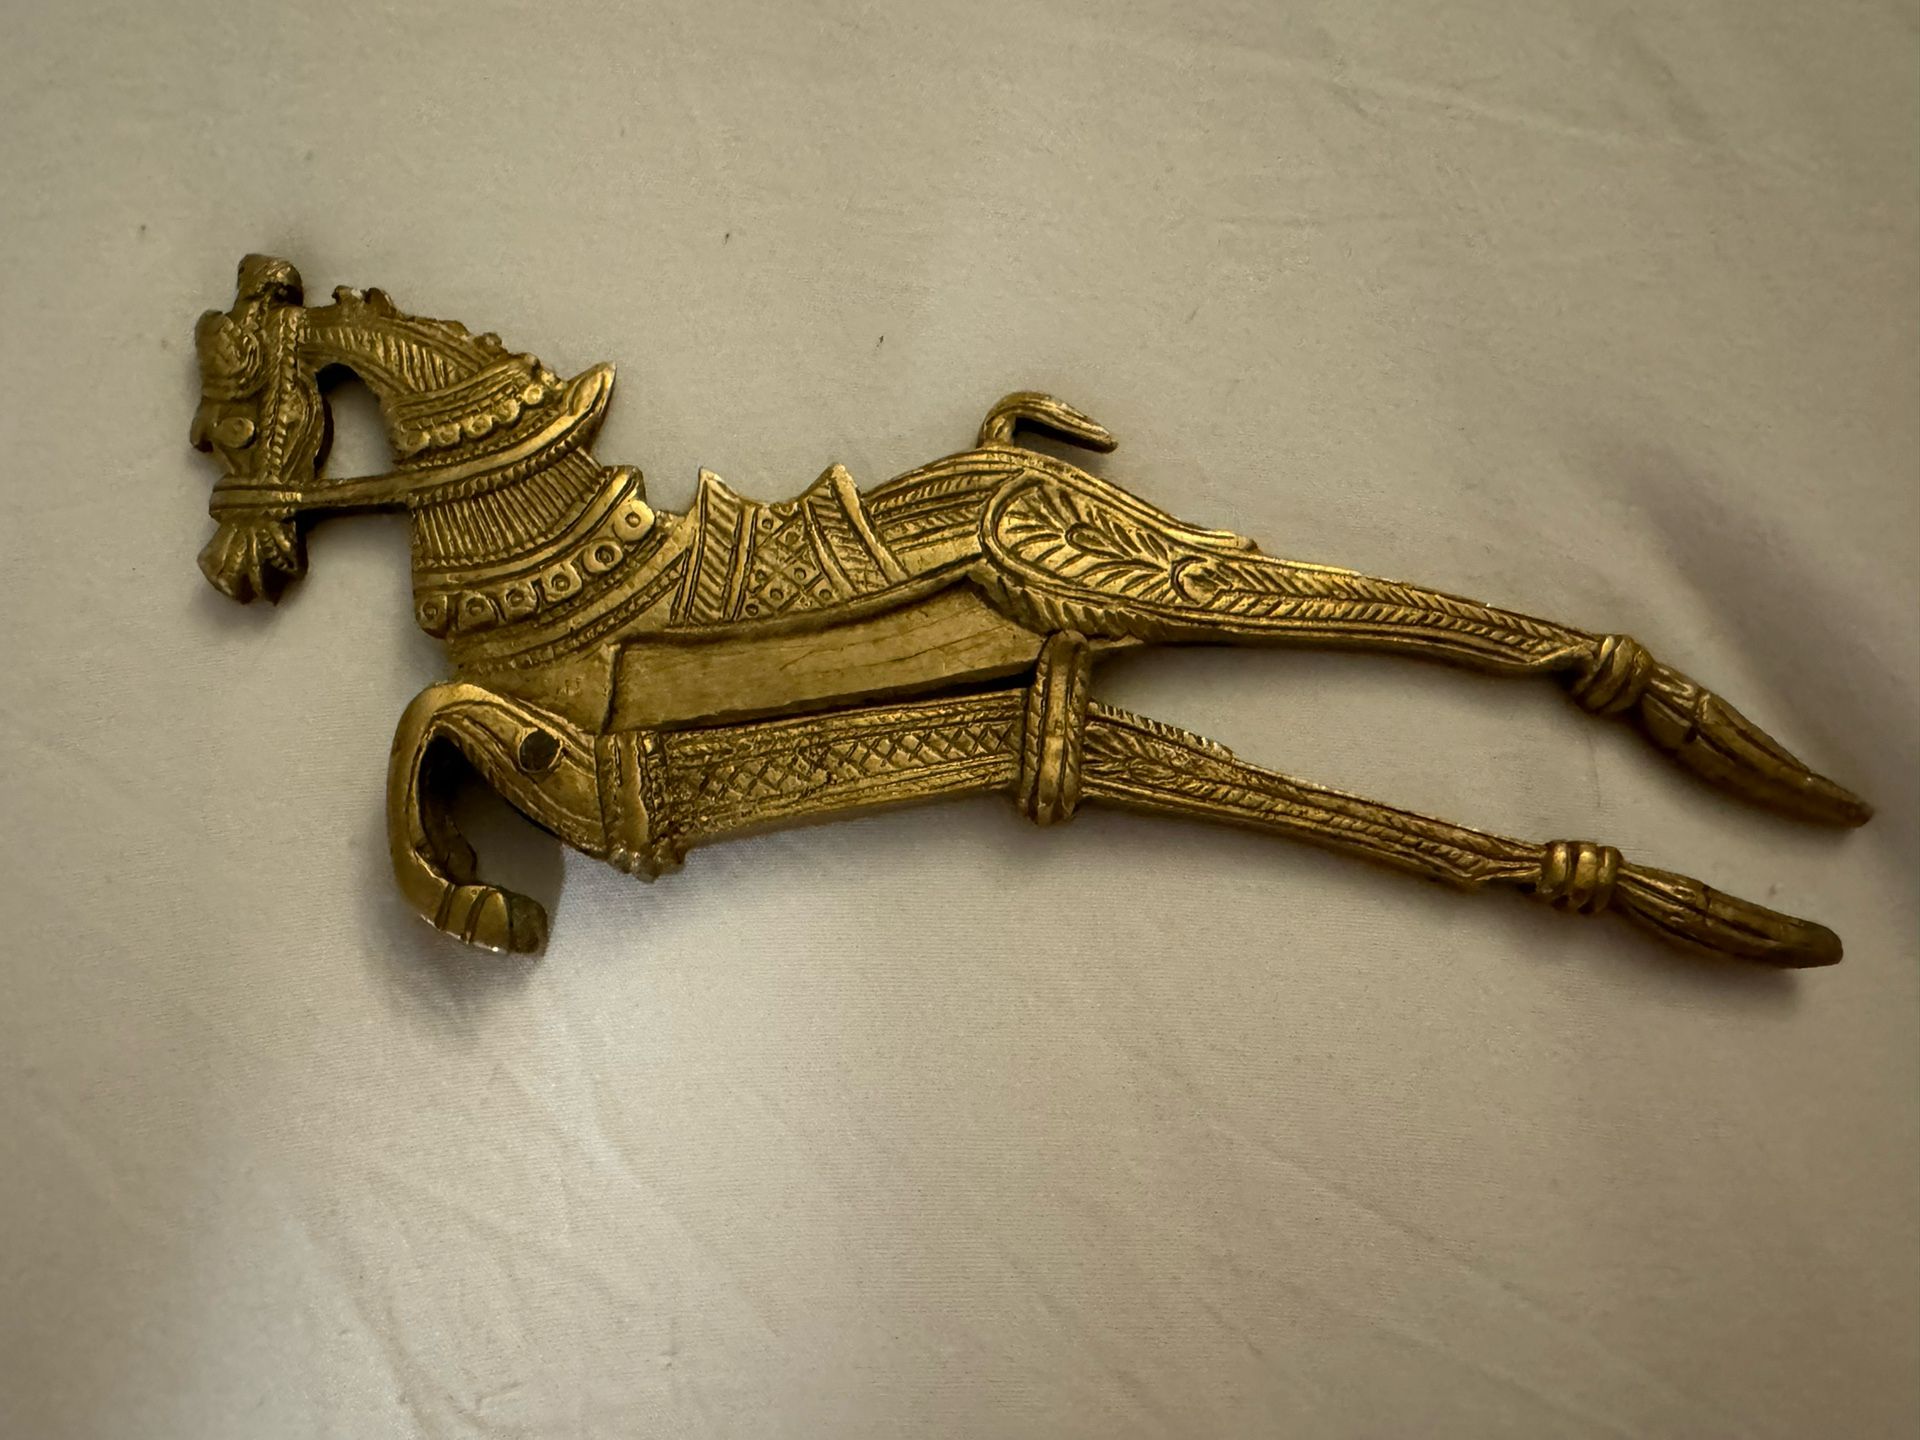 Antique Brass Horse Betel Nut Supari Cutter Ornate Chopping Tool Blade Borneo